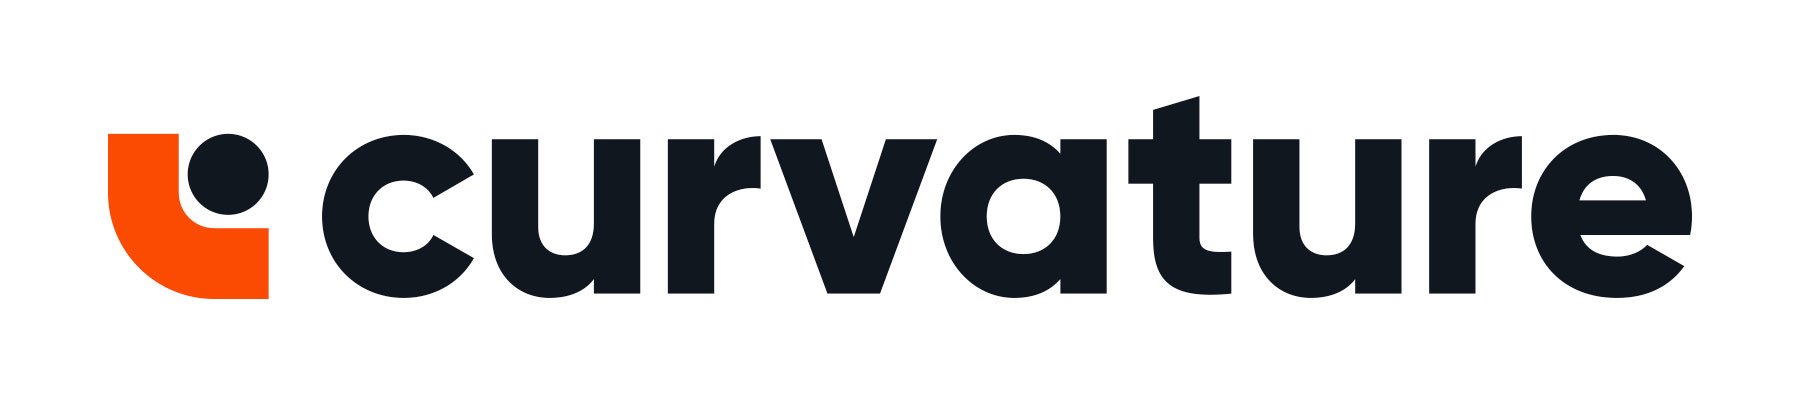 Curvature VP Randi Mitev Named to Service Industry Association Board